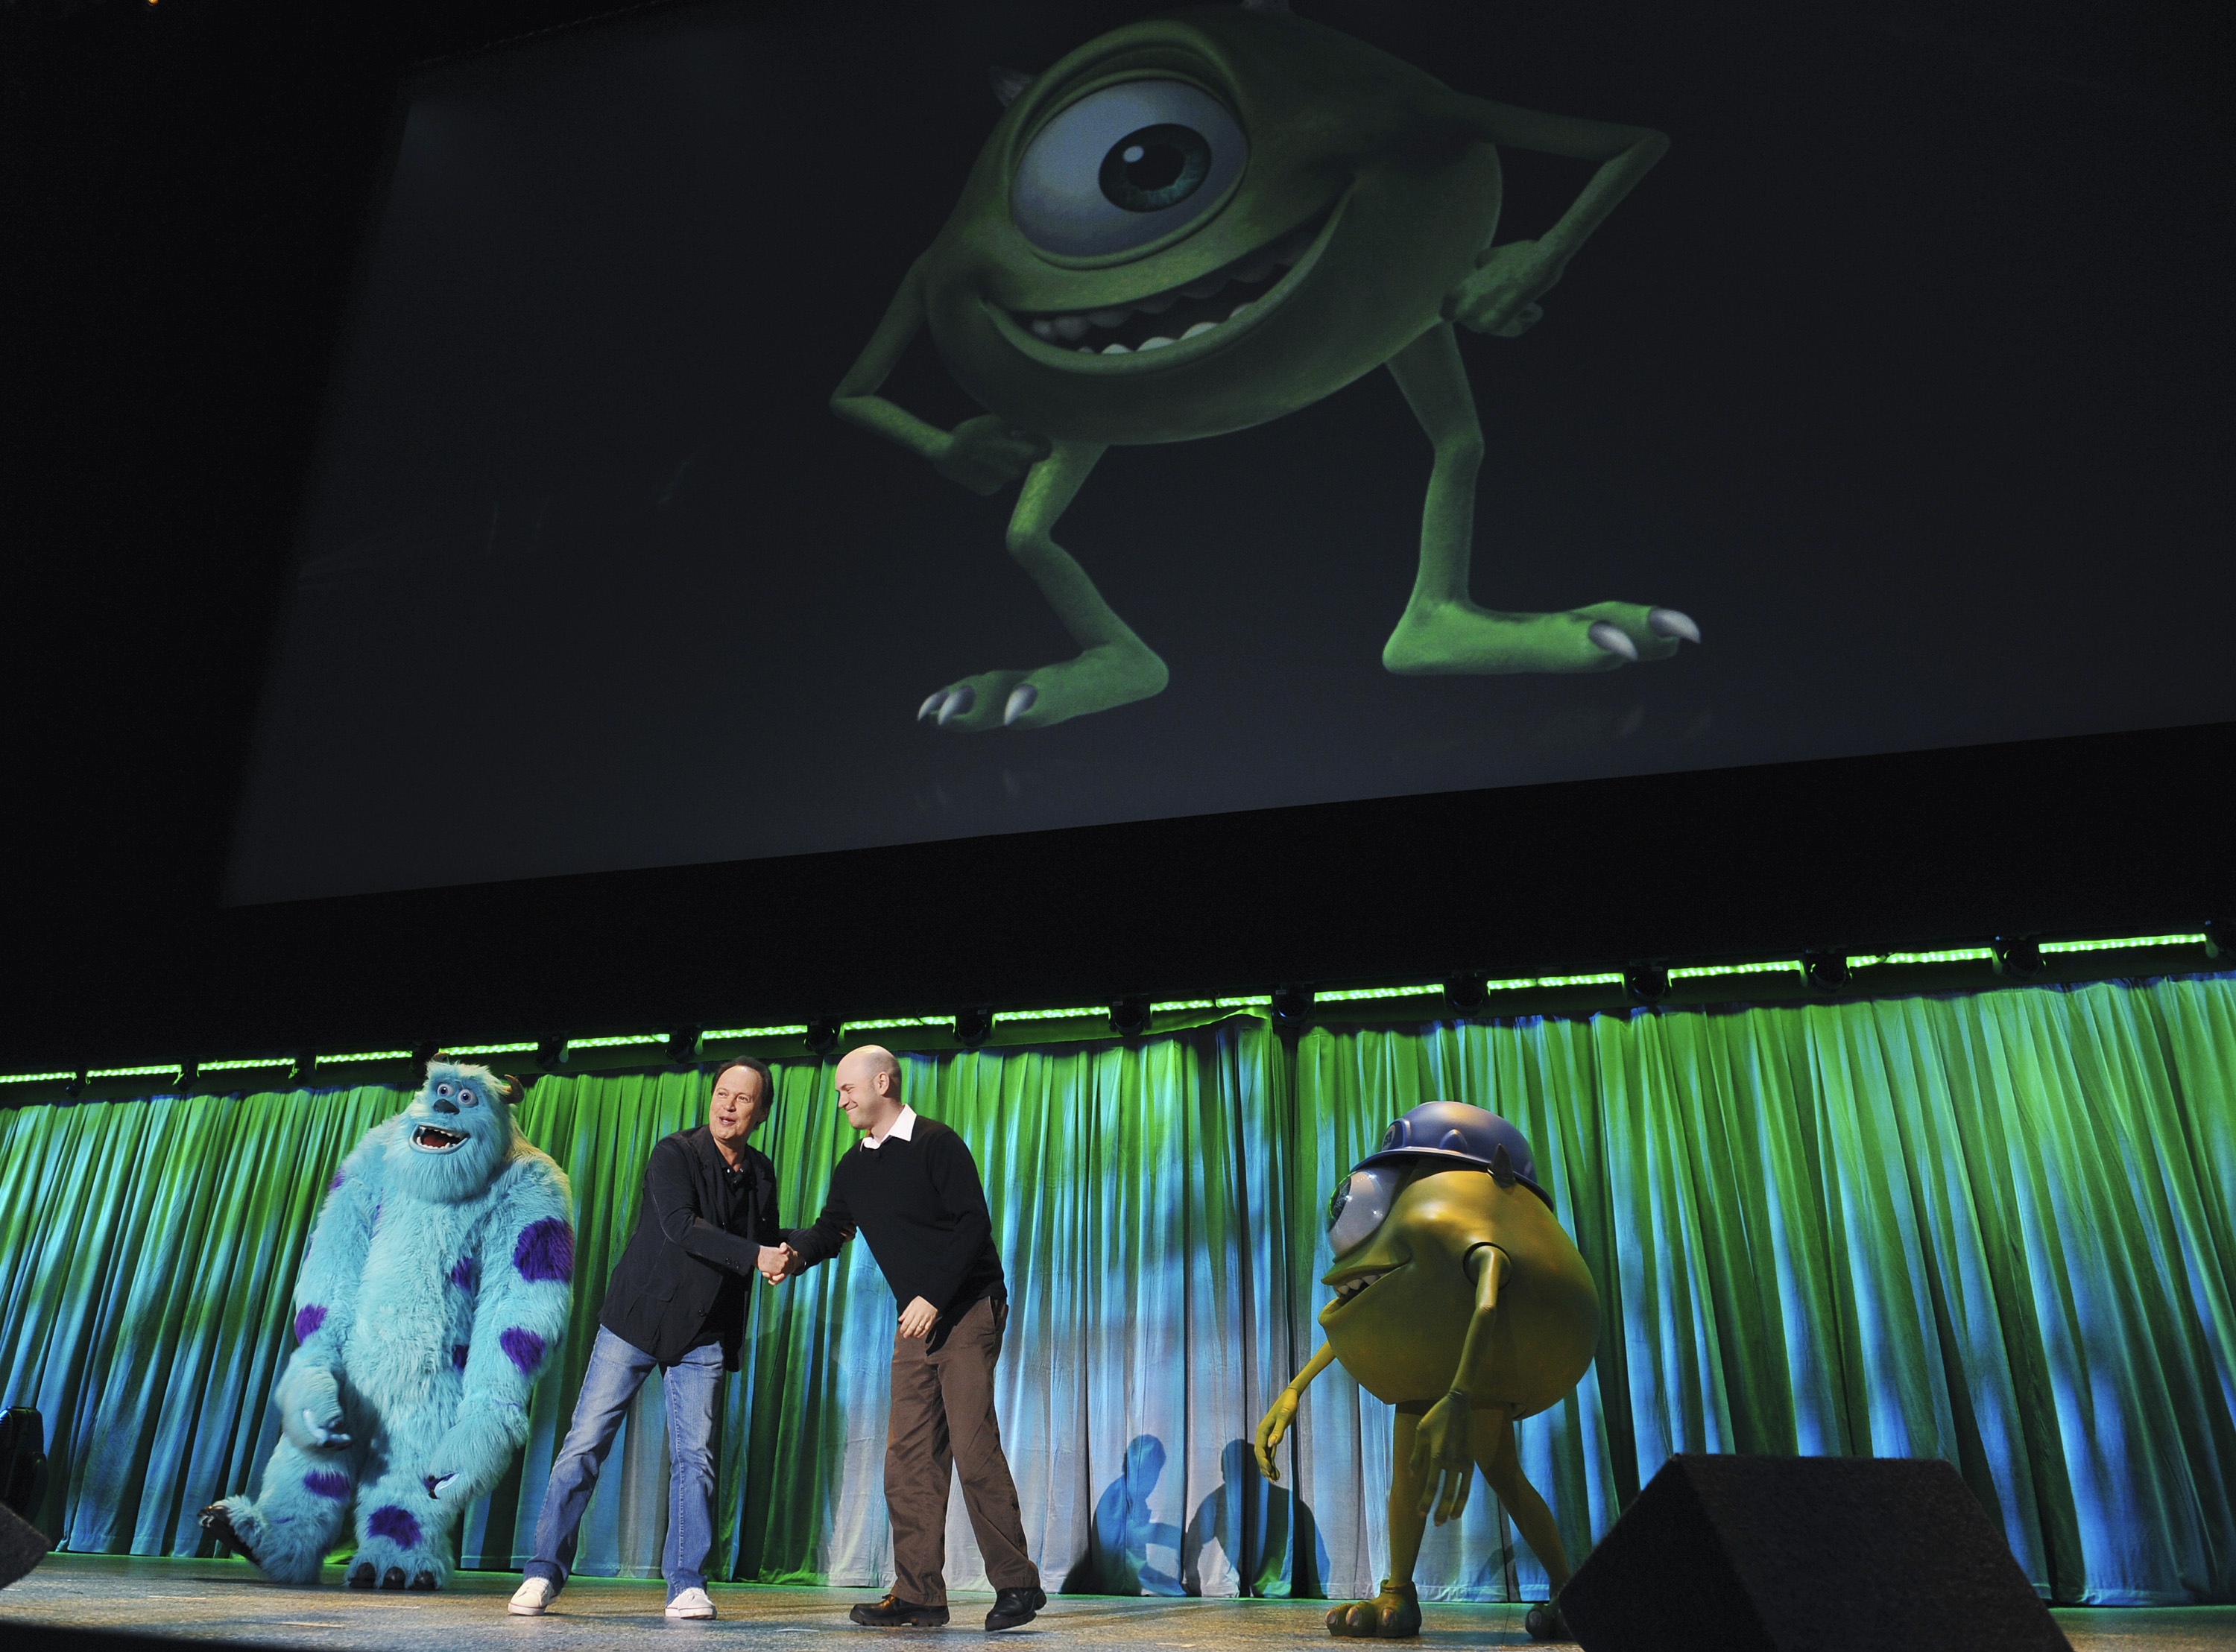 Disney + estrena un spin-off de Monstruos, S.A. 